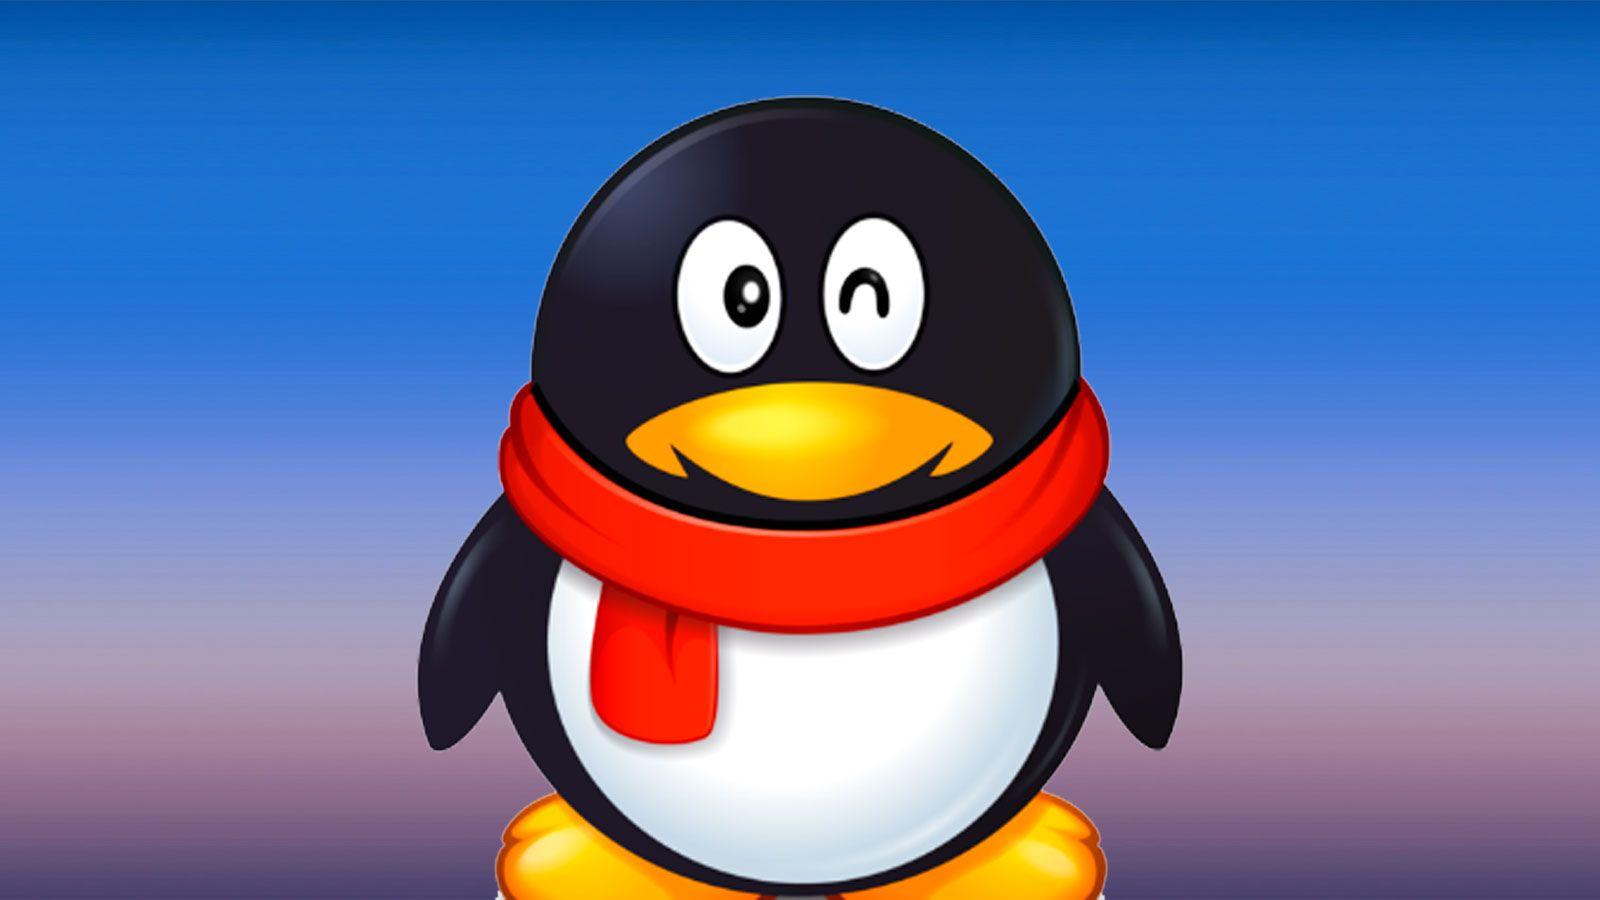 QQ Messenger Logo - Meet Tencent's QQ Penguin > 360 | Article / Advertising Week